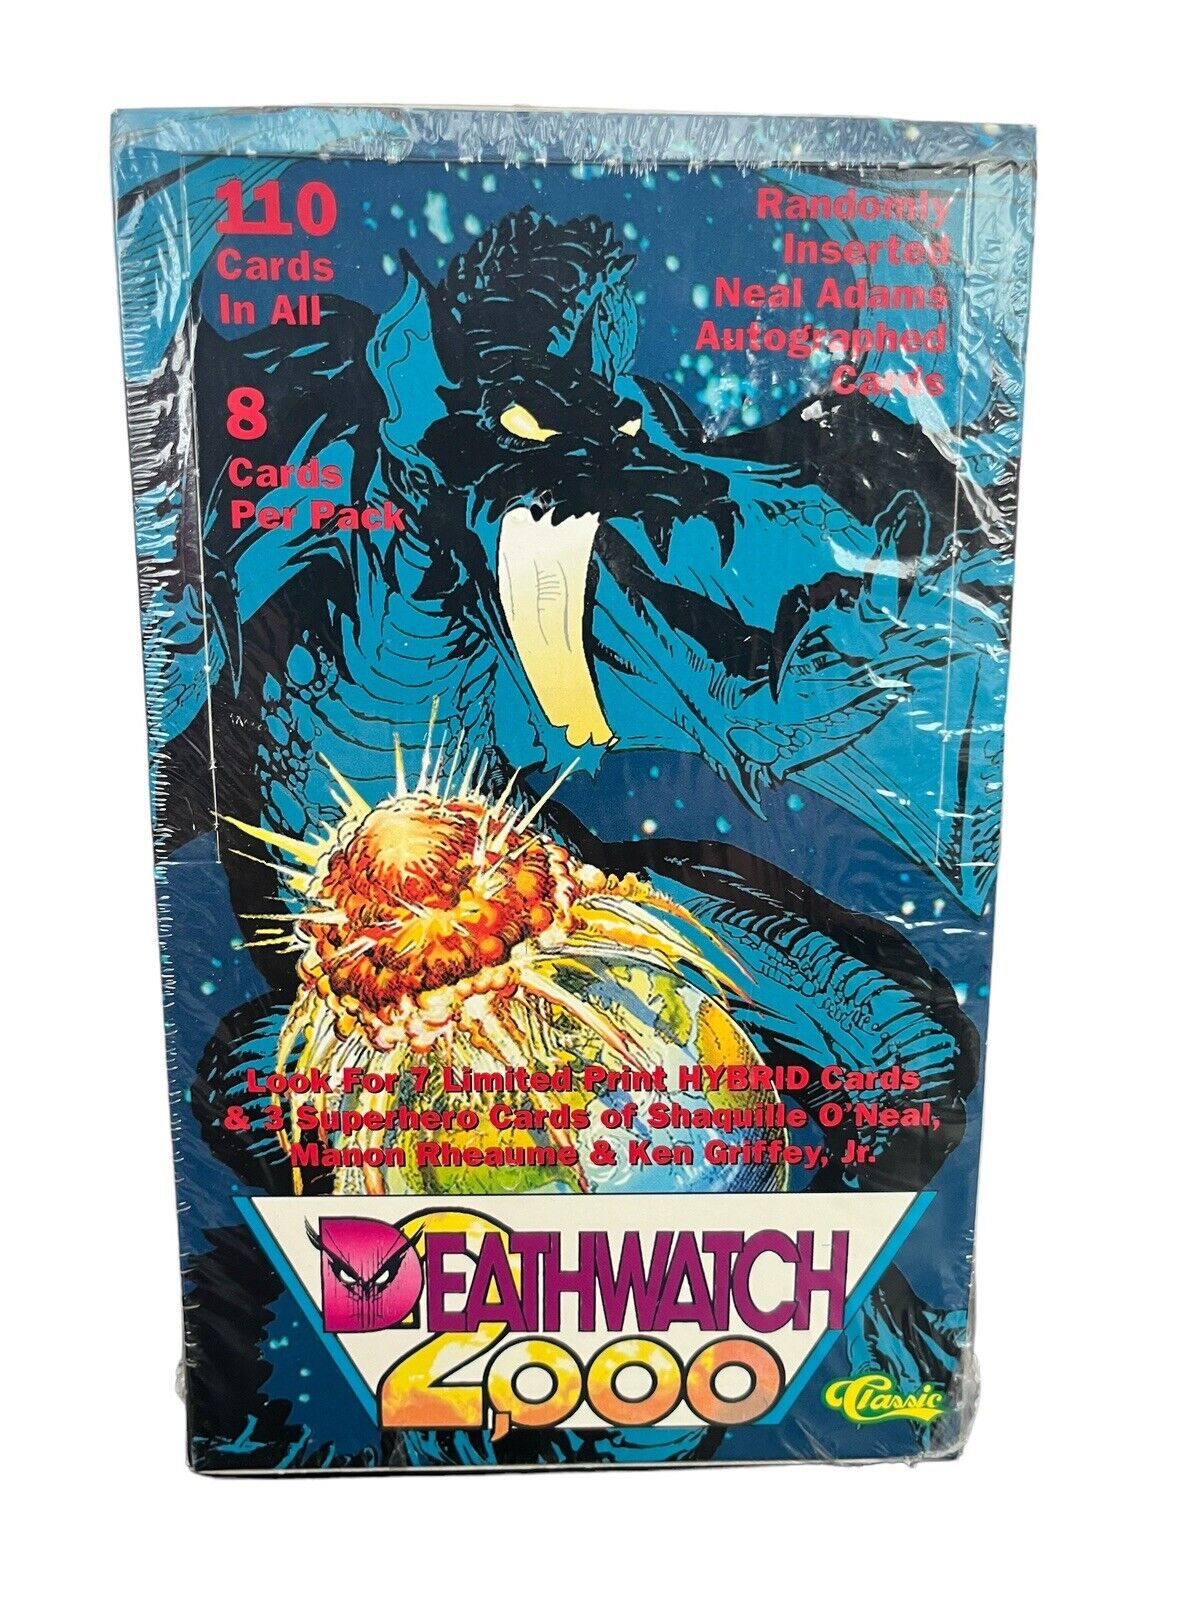 NEW VINTAGE 1993 Classic Deathwatch 2000 Sealed Box Original